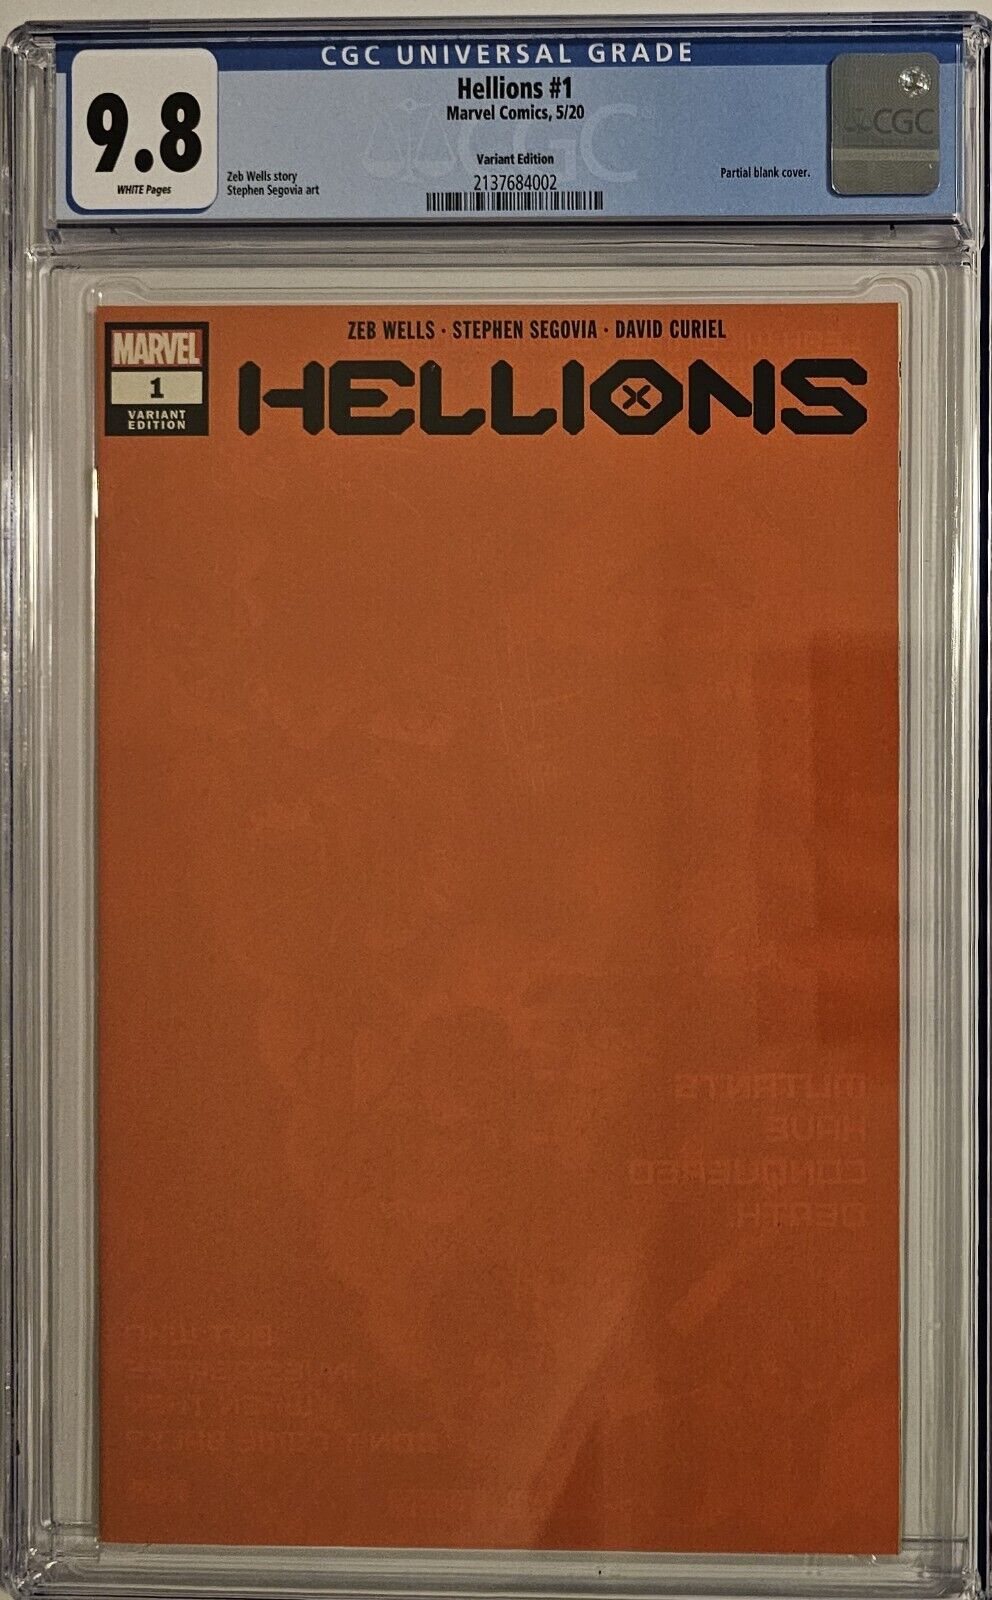 Hellions (2020 Marvel) #1 Orange Variant CGC 9.8 1:200 Partial Blank Cover